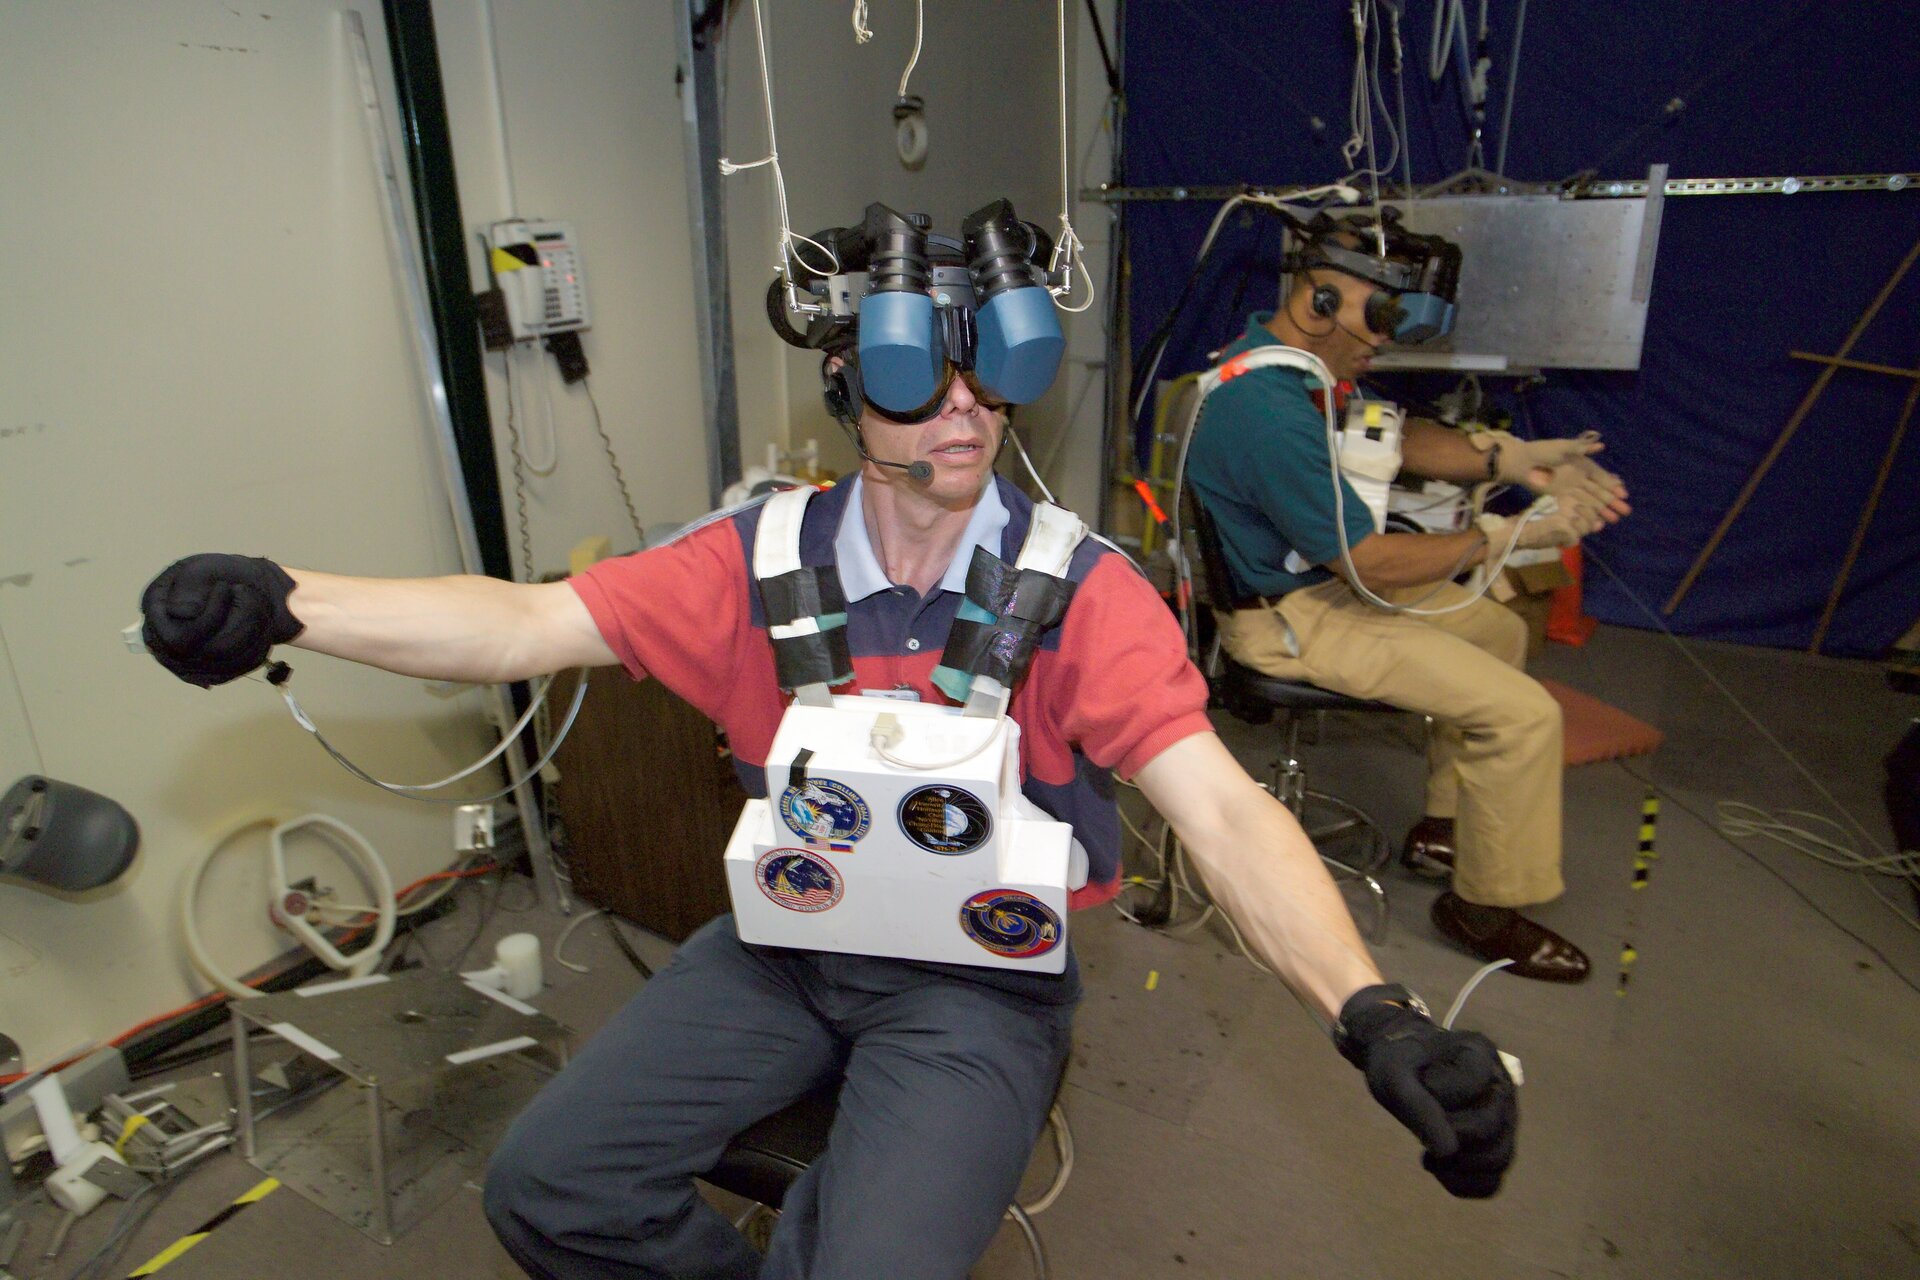 Fuglesang uses virtual reality for spacewalk training